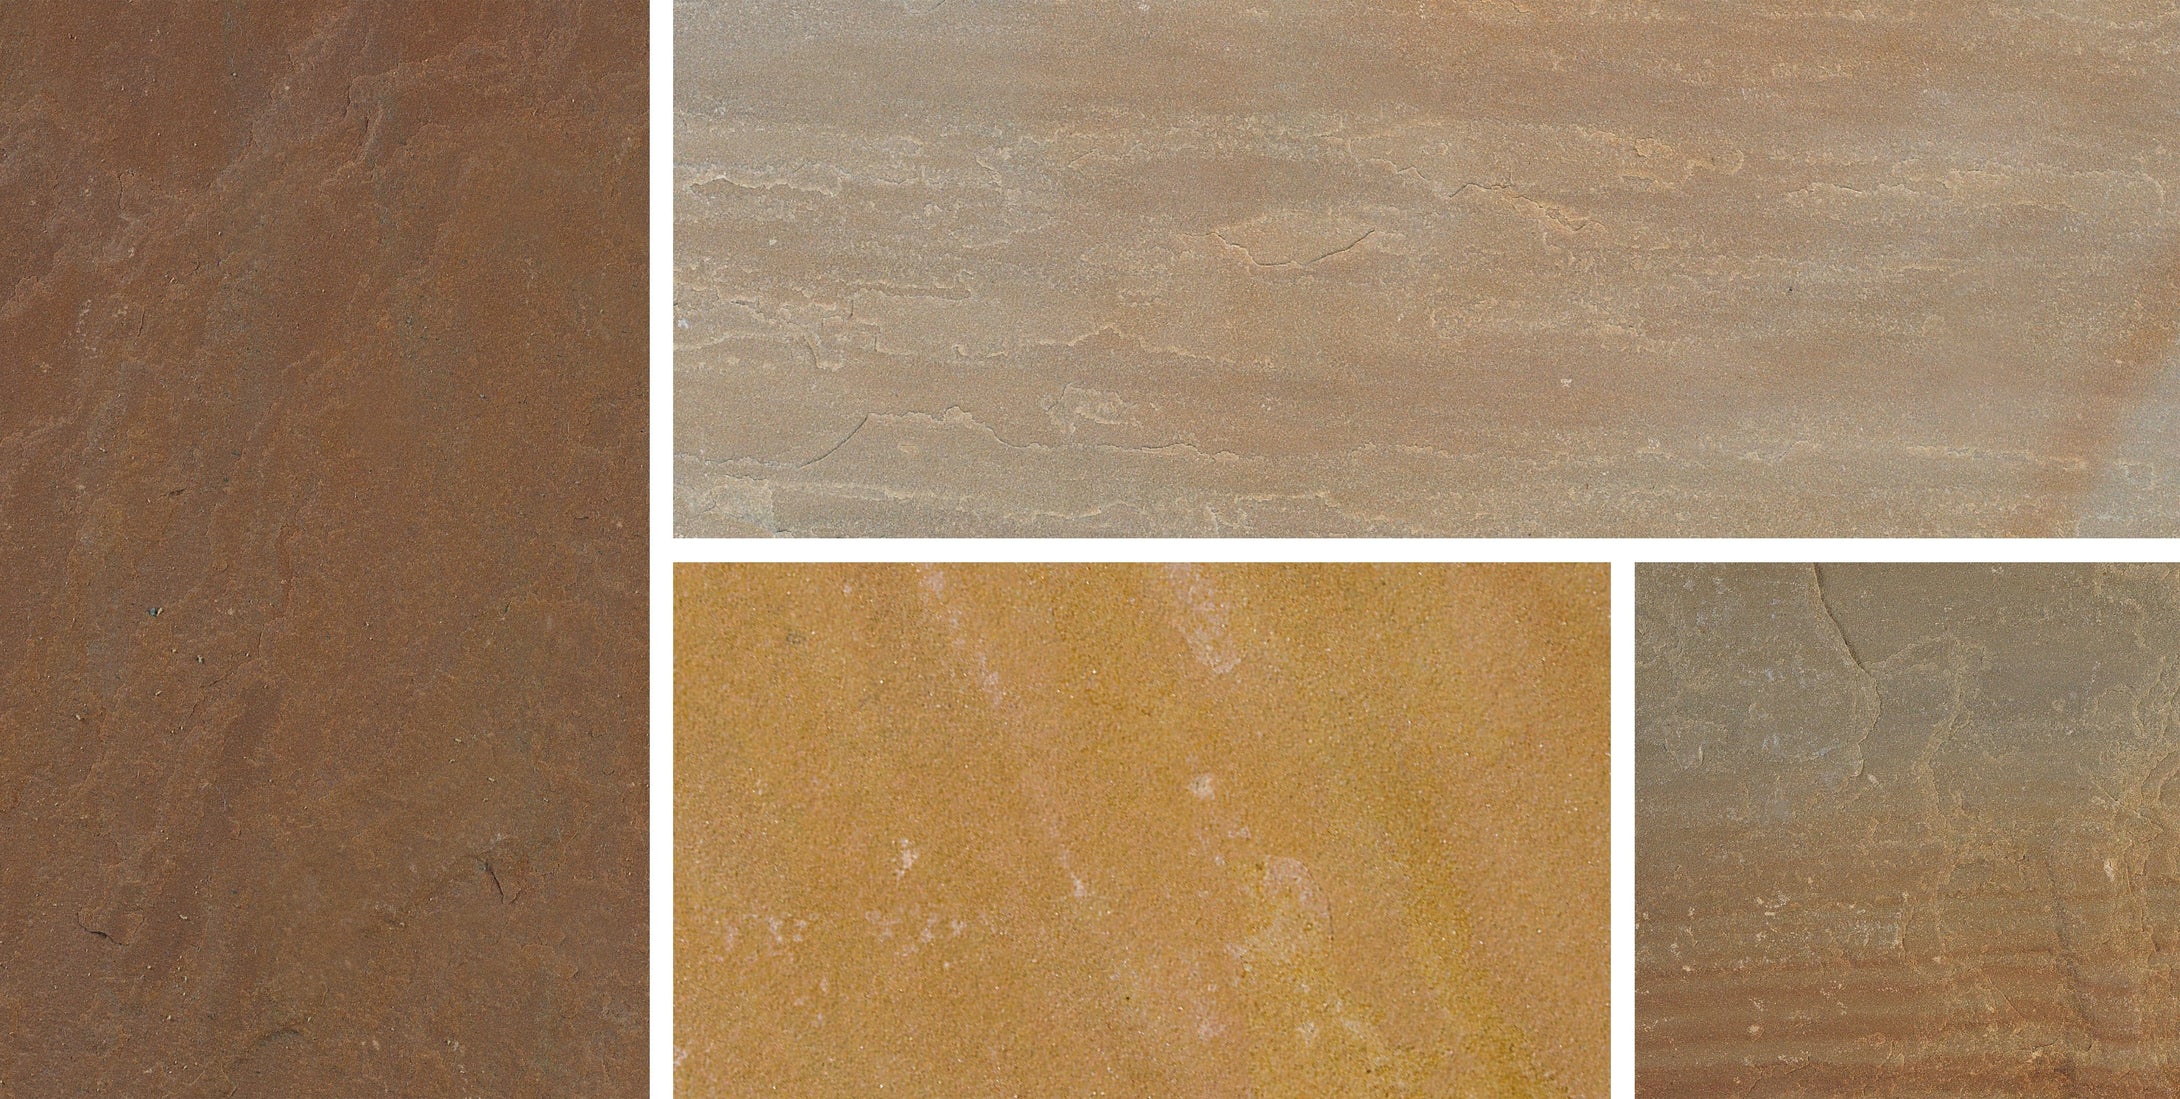 Natural Sandstone Paving  in Sunset Buff / Camel Dust paving slabs